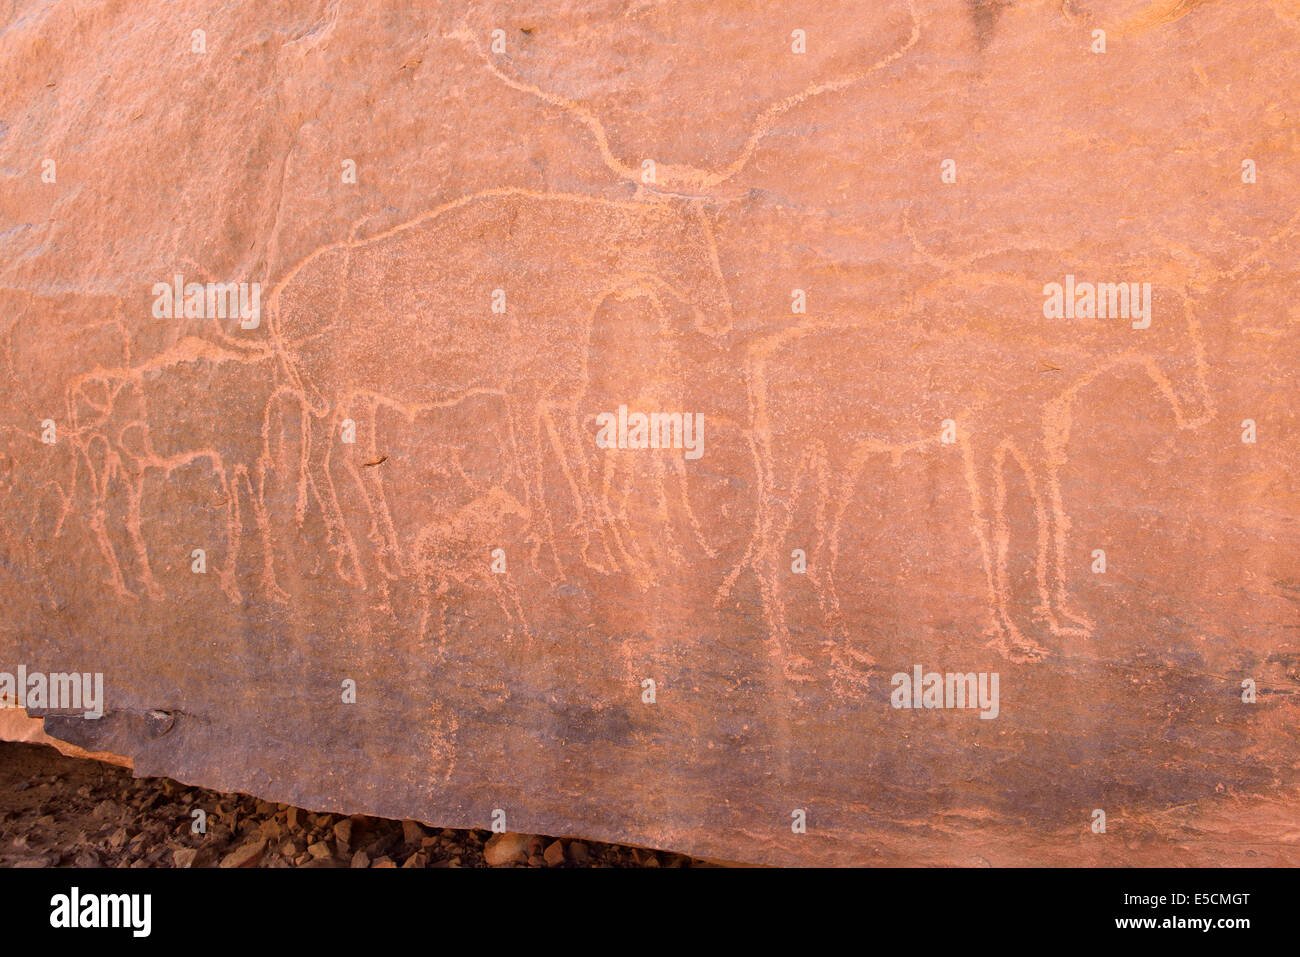 Neolithic rock art, Bubaline or Bubalus period, rock engraving of bulls, Iherir canyon, Tassili n'Ajjer National Park Stock Photo